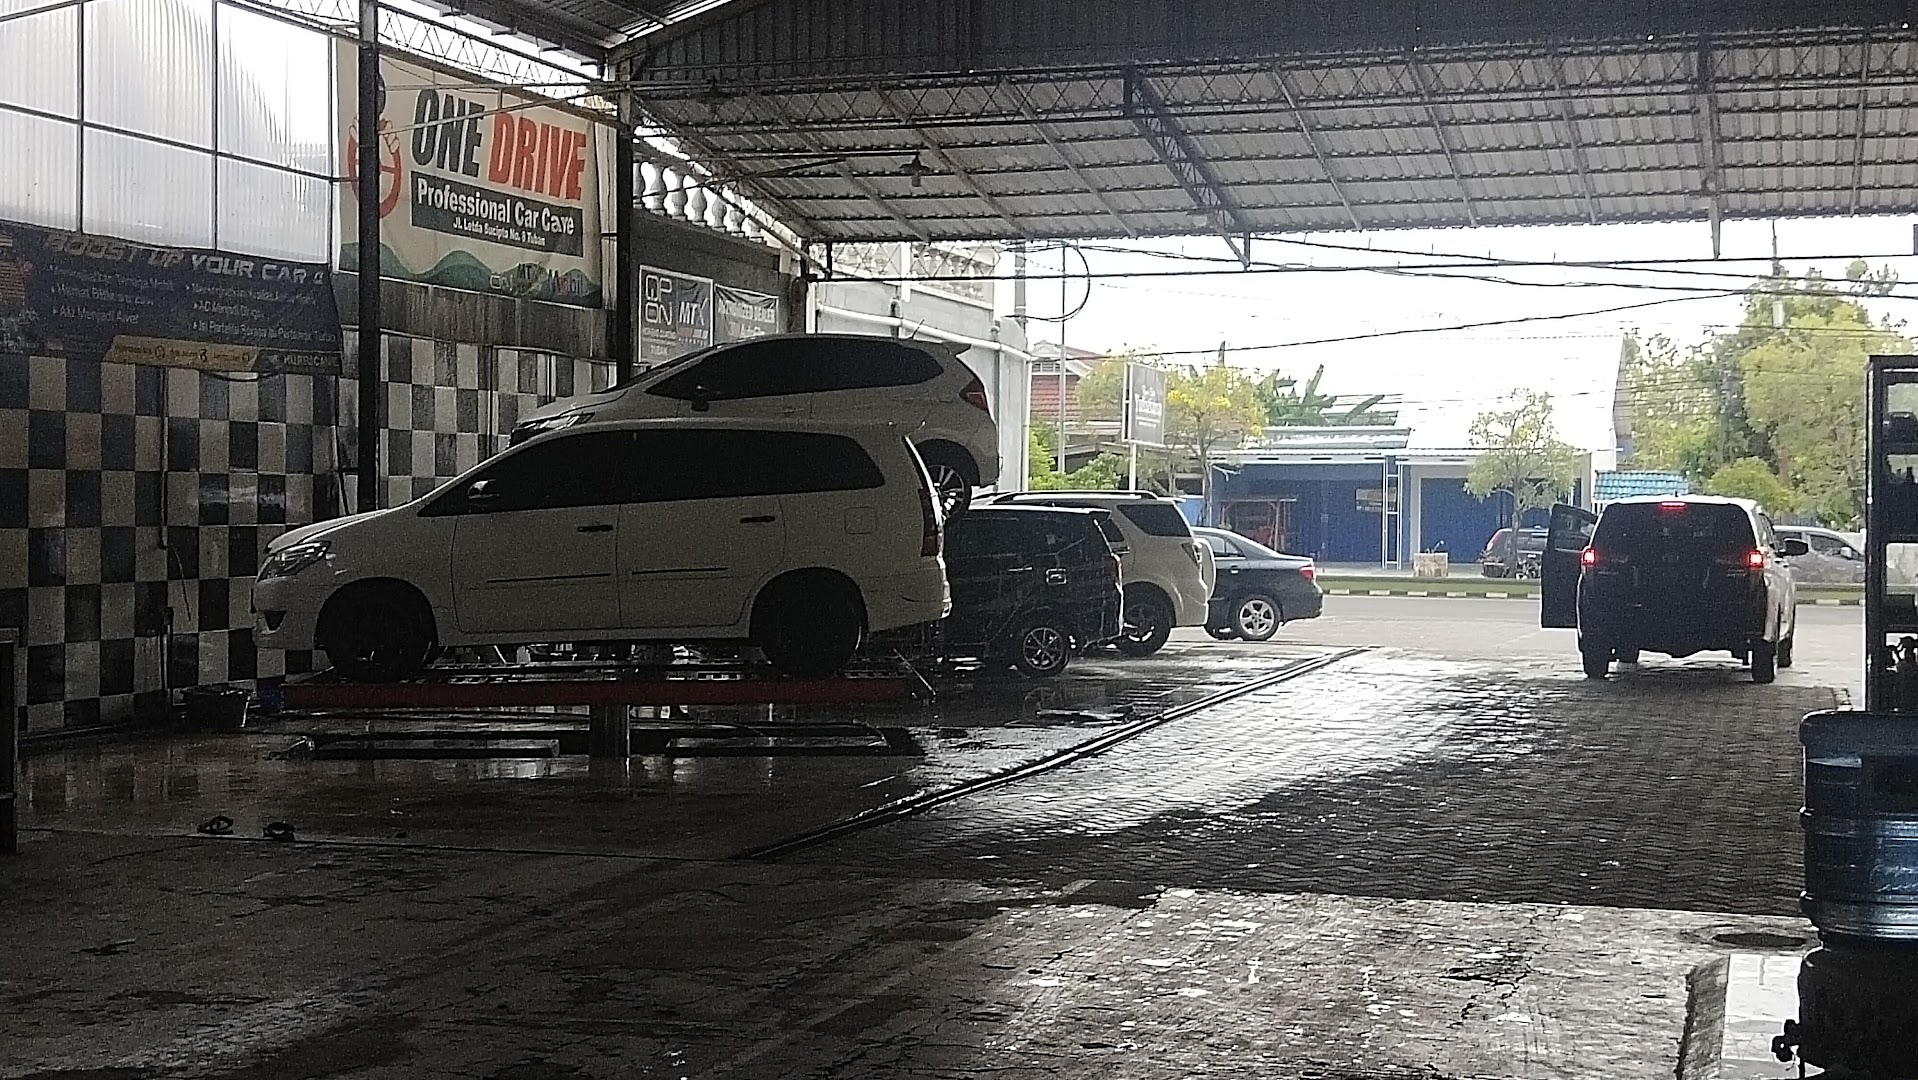 One Drive Professional Car Wash Photo